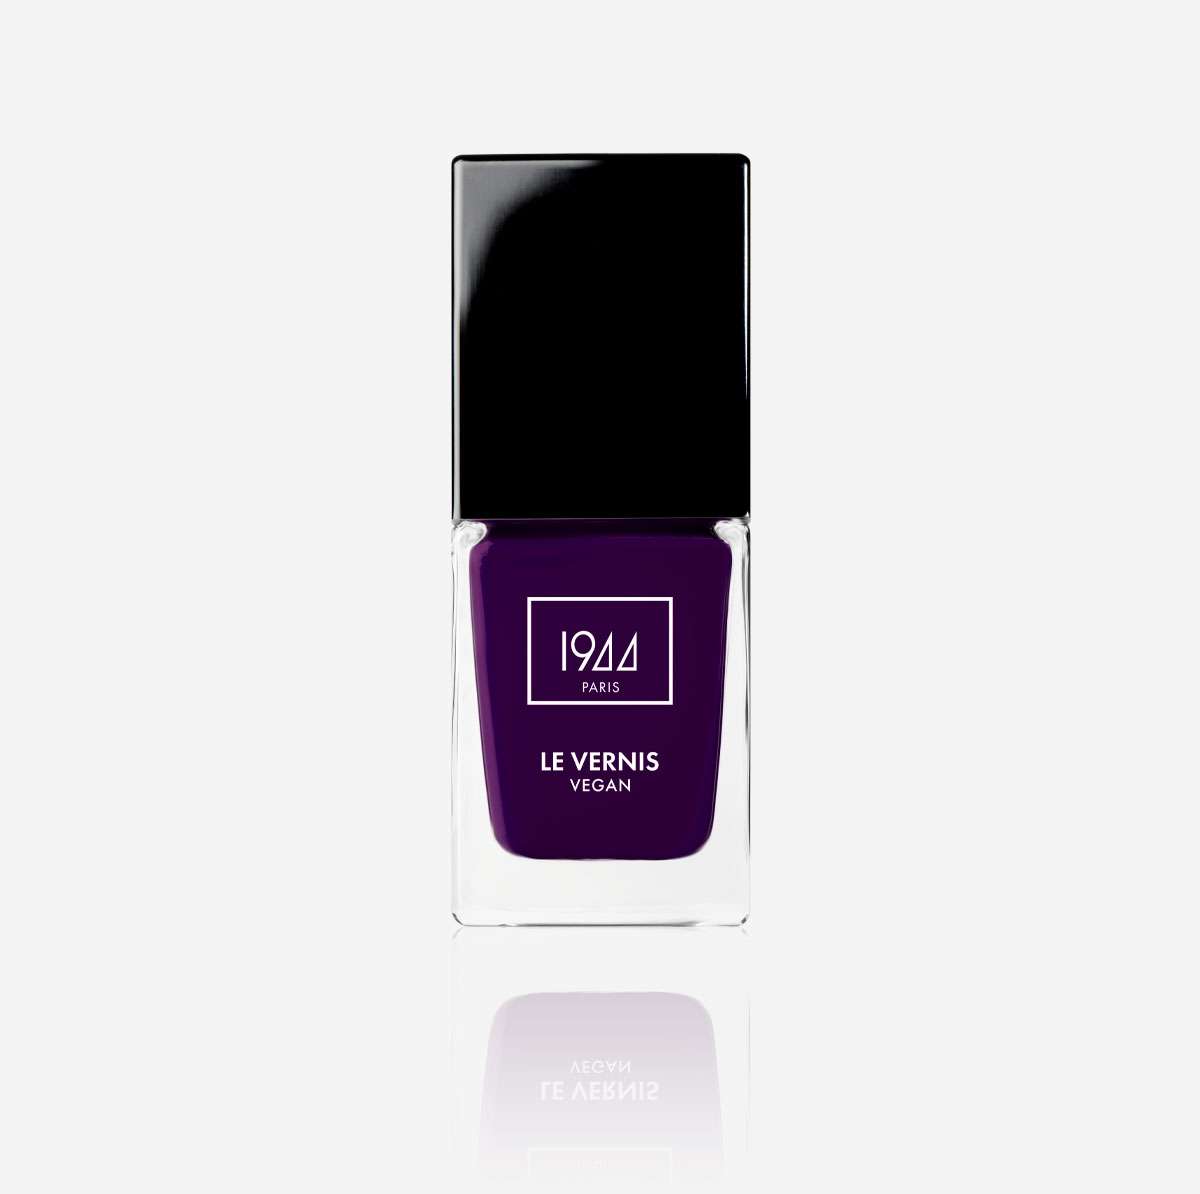 Natural vegan nail lacquer Ilona dark purple 1944 Paris